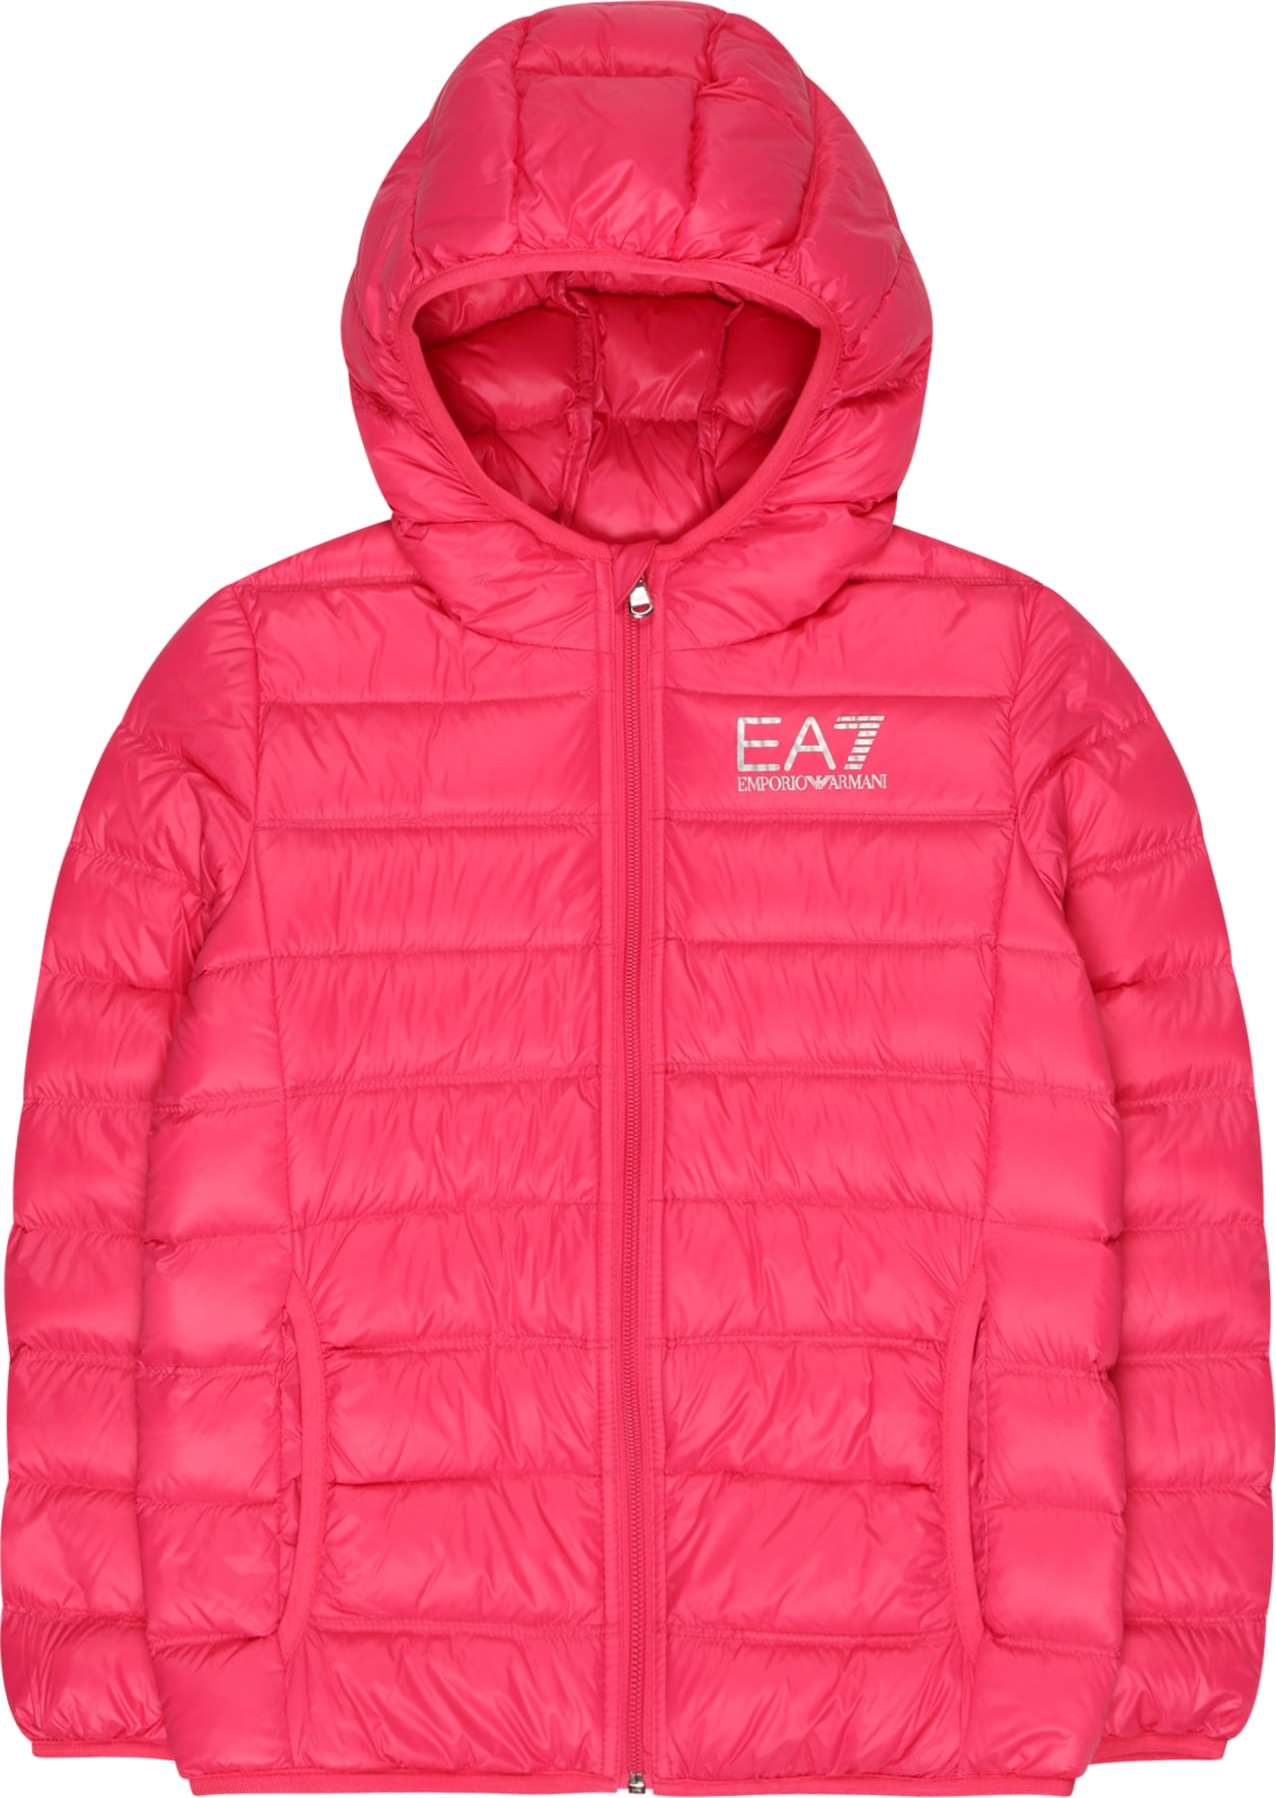 EA7 Emporio Armani Přechodná bunda pink